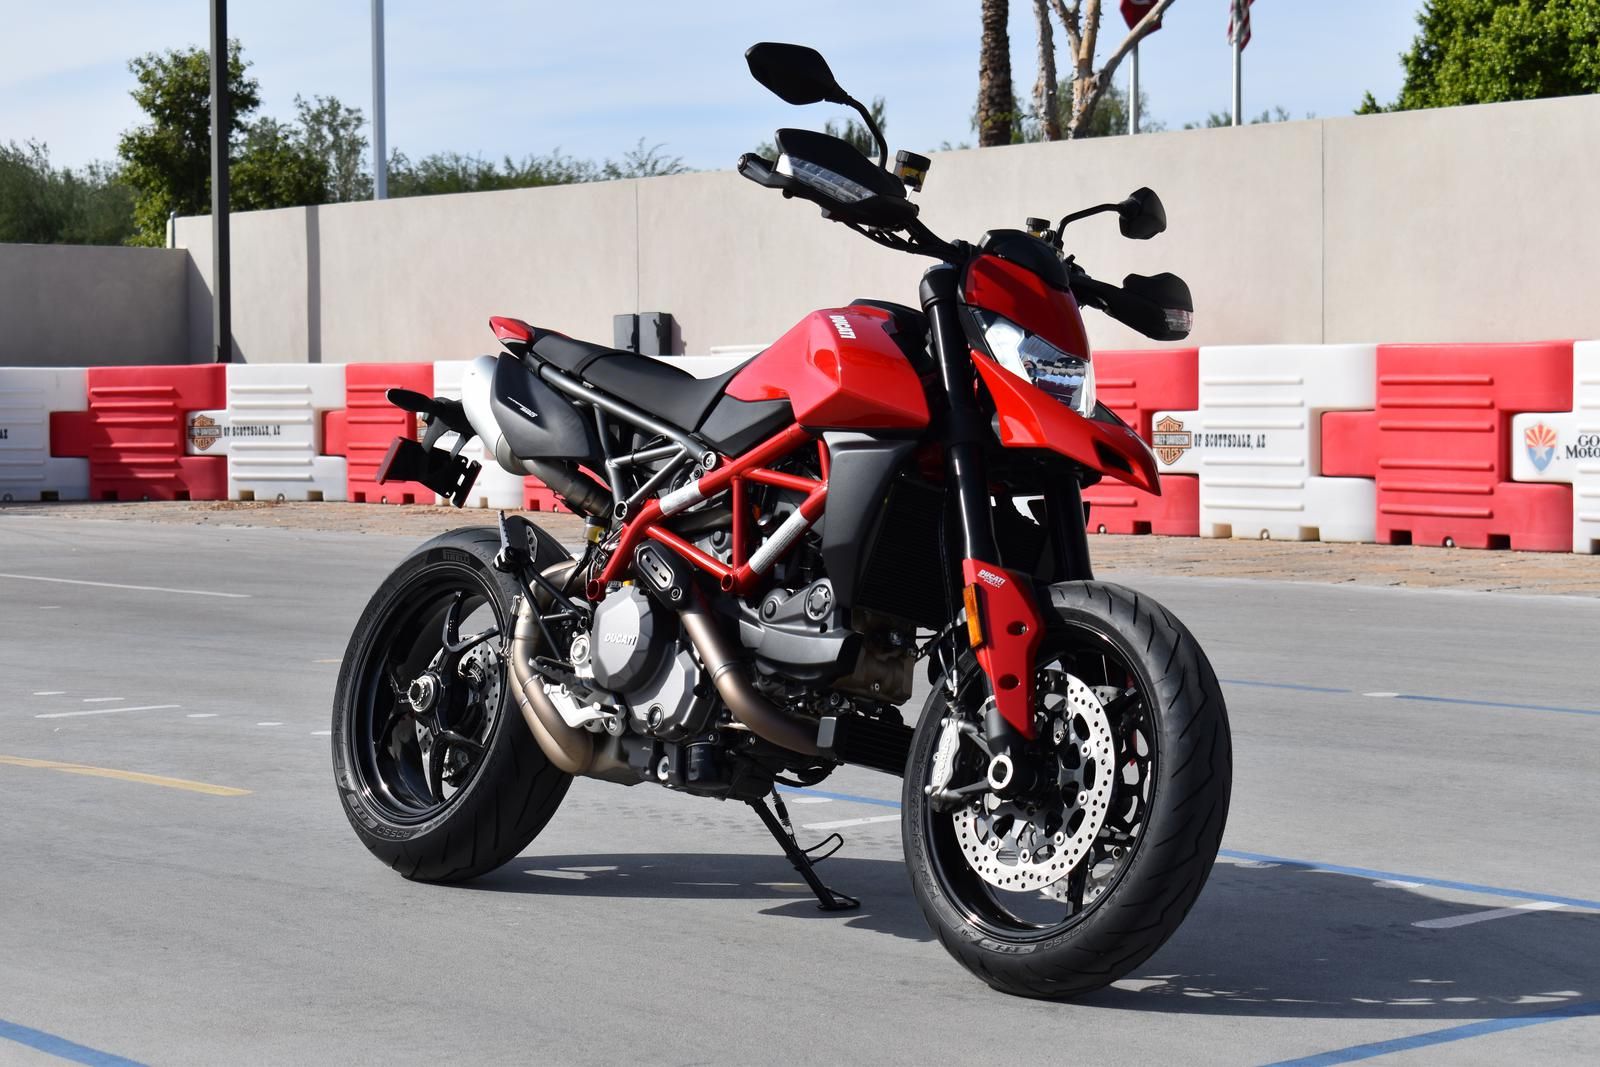 Ducati Hypermotard 950 for sale